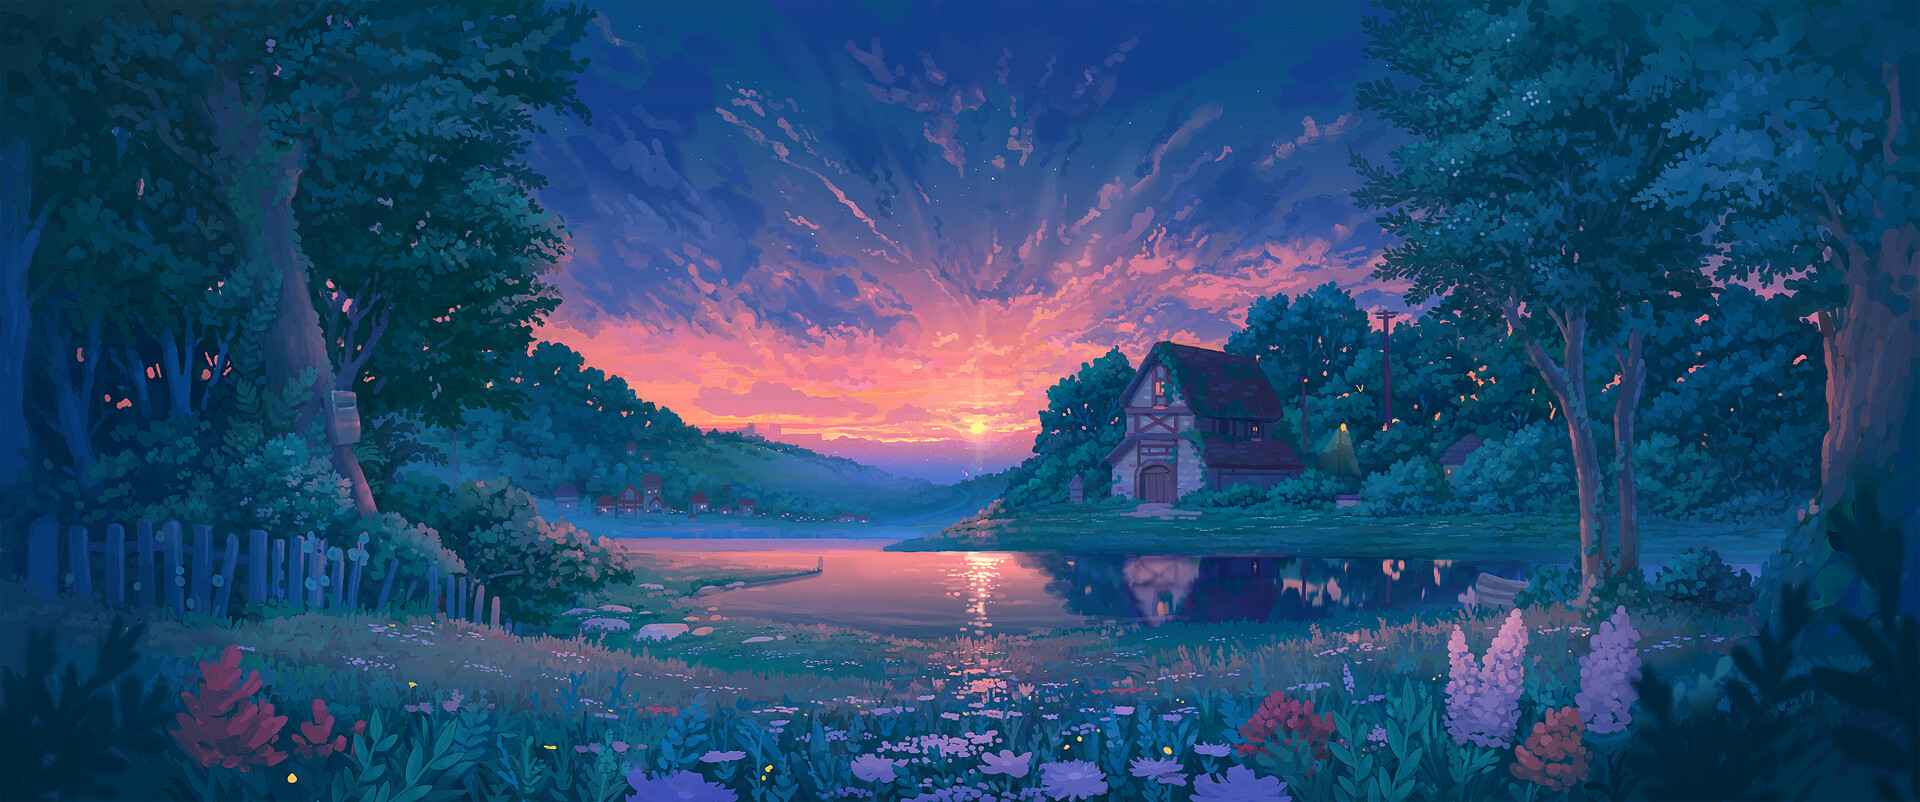 Denis Istomin Painting Lake Forest Cottage Sunrise Lavender Fence Artwork Fantasy Art Sky Sunlight F 1920x802